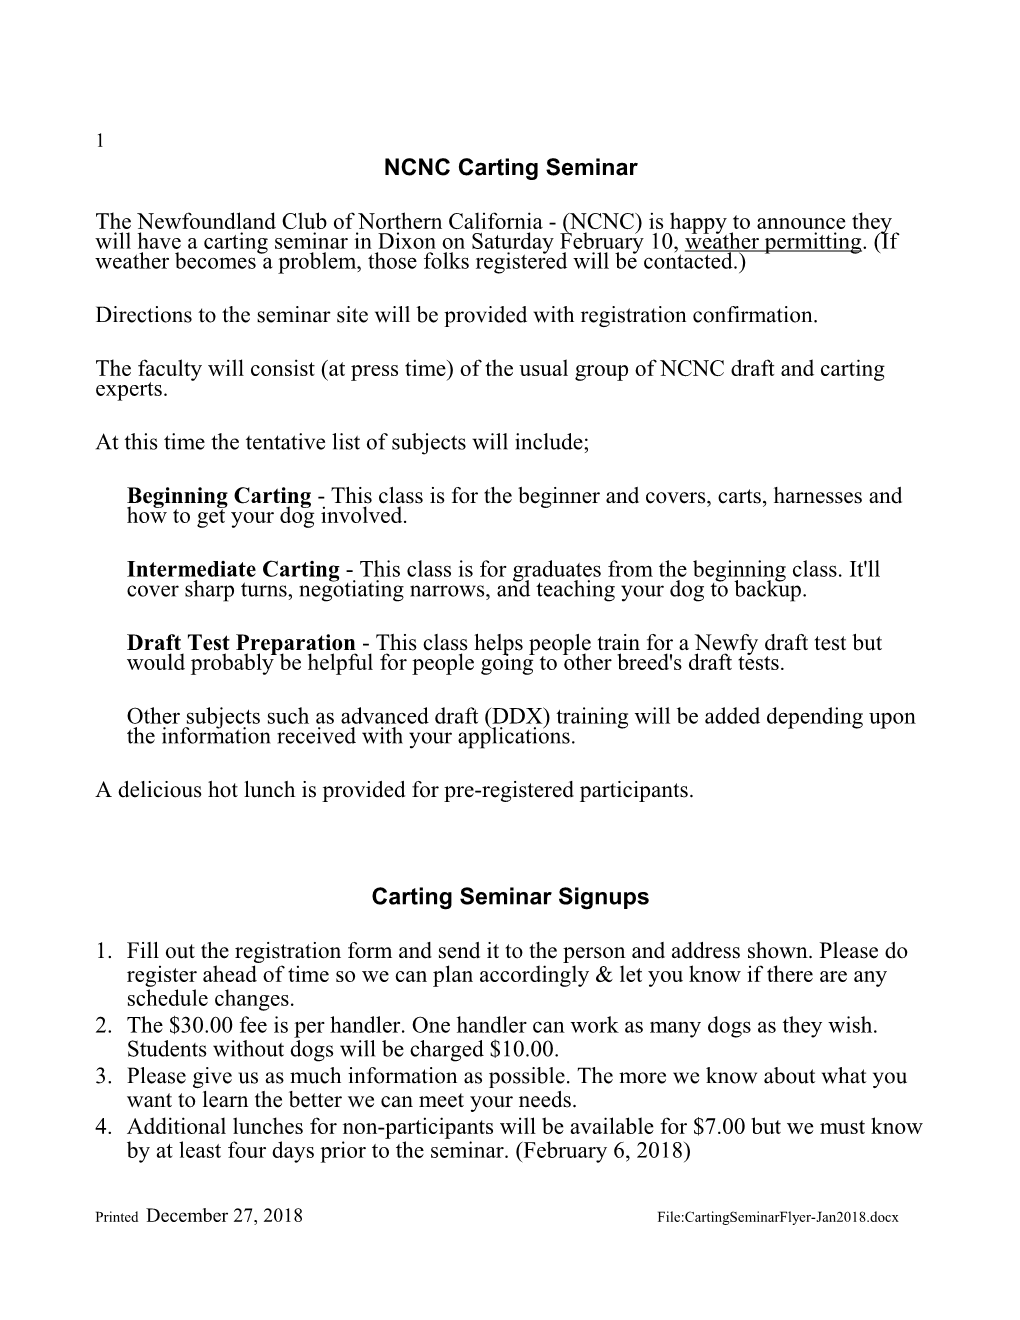 NCNC Carting Seminar